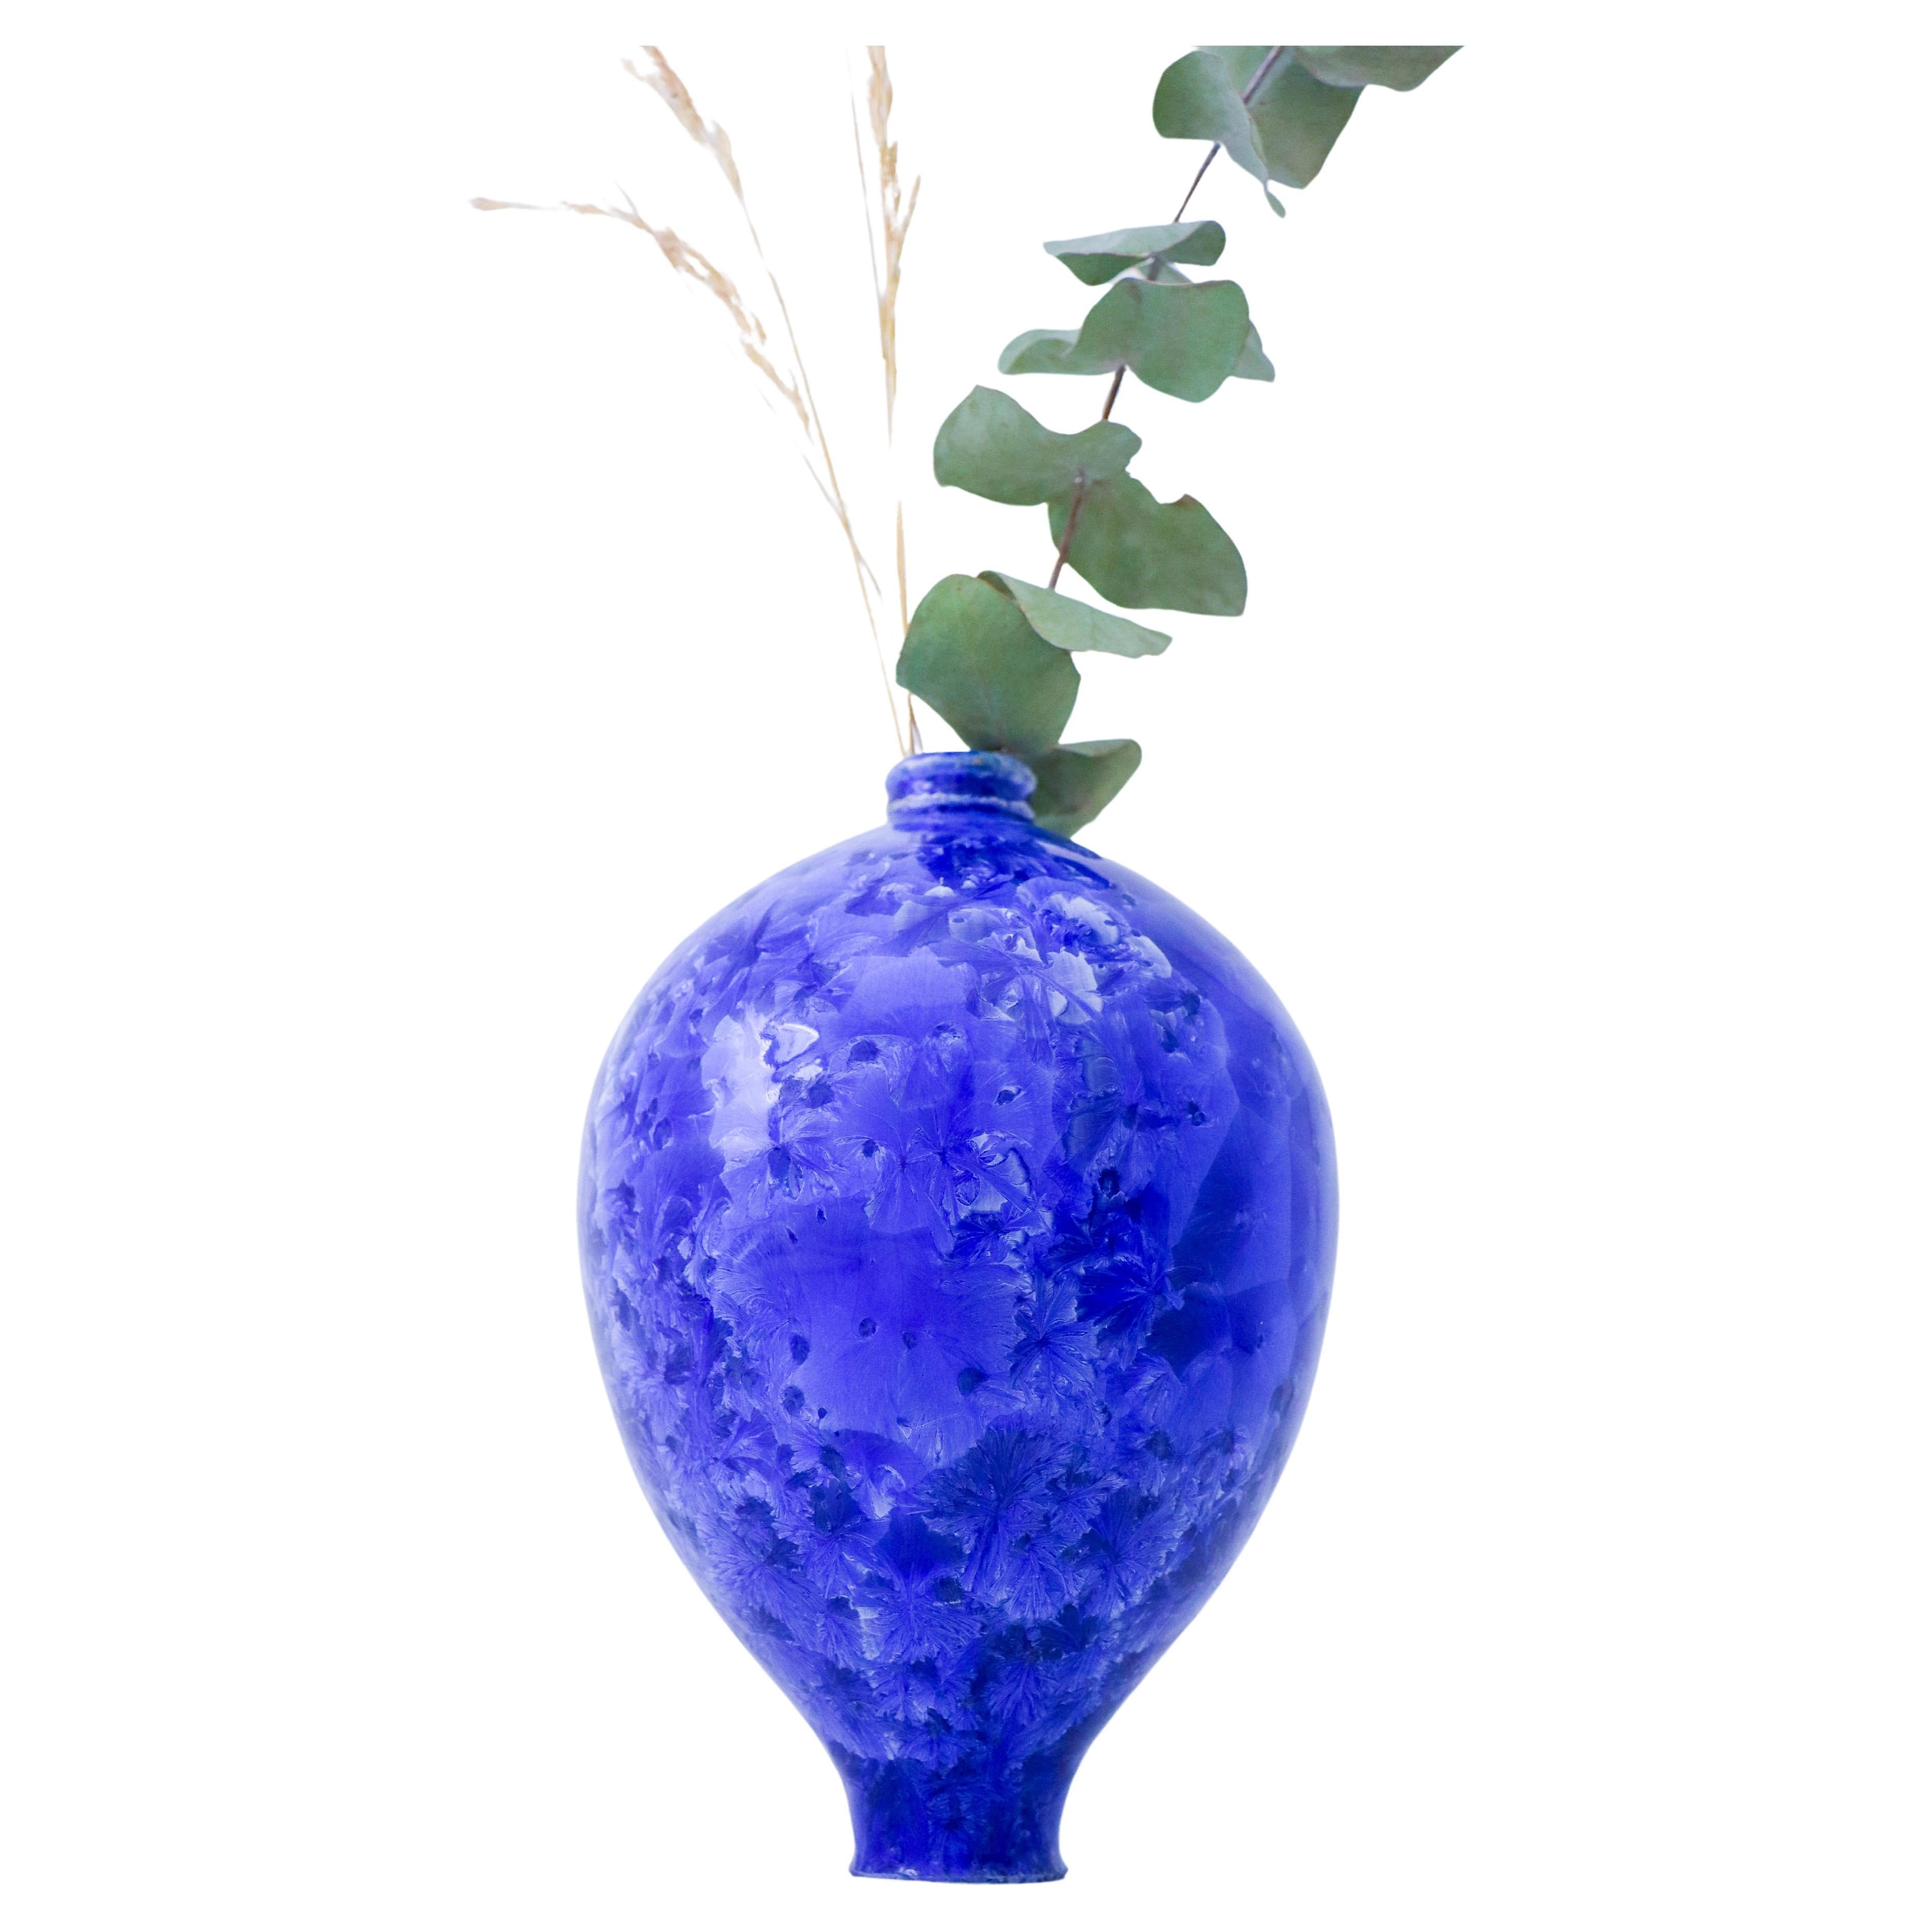 Isak Isaksson - Vase en céramique bleue - émail cristallin - Artiste contemporain